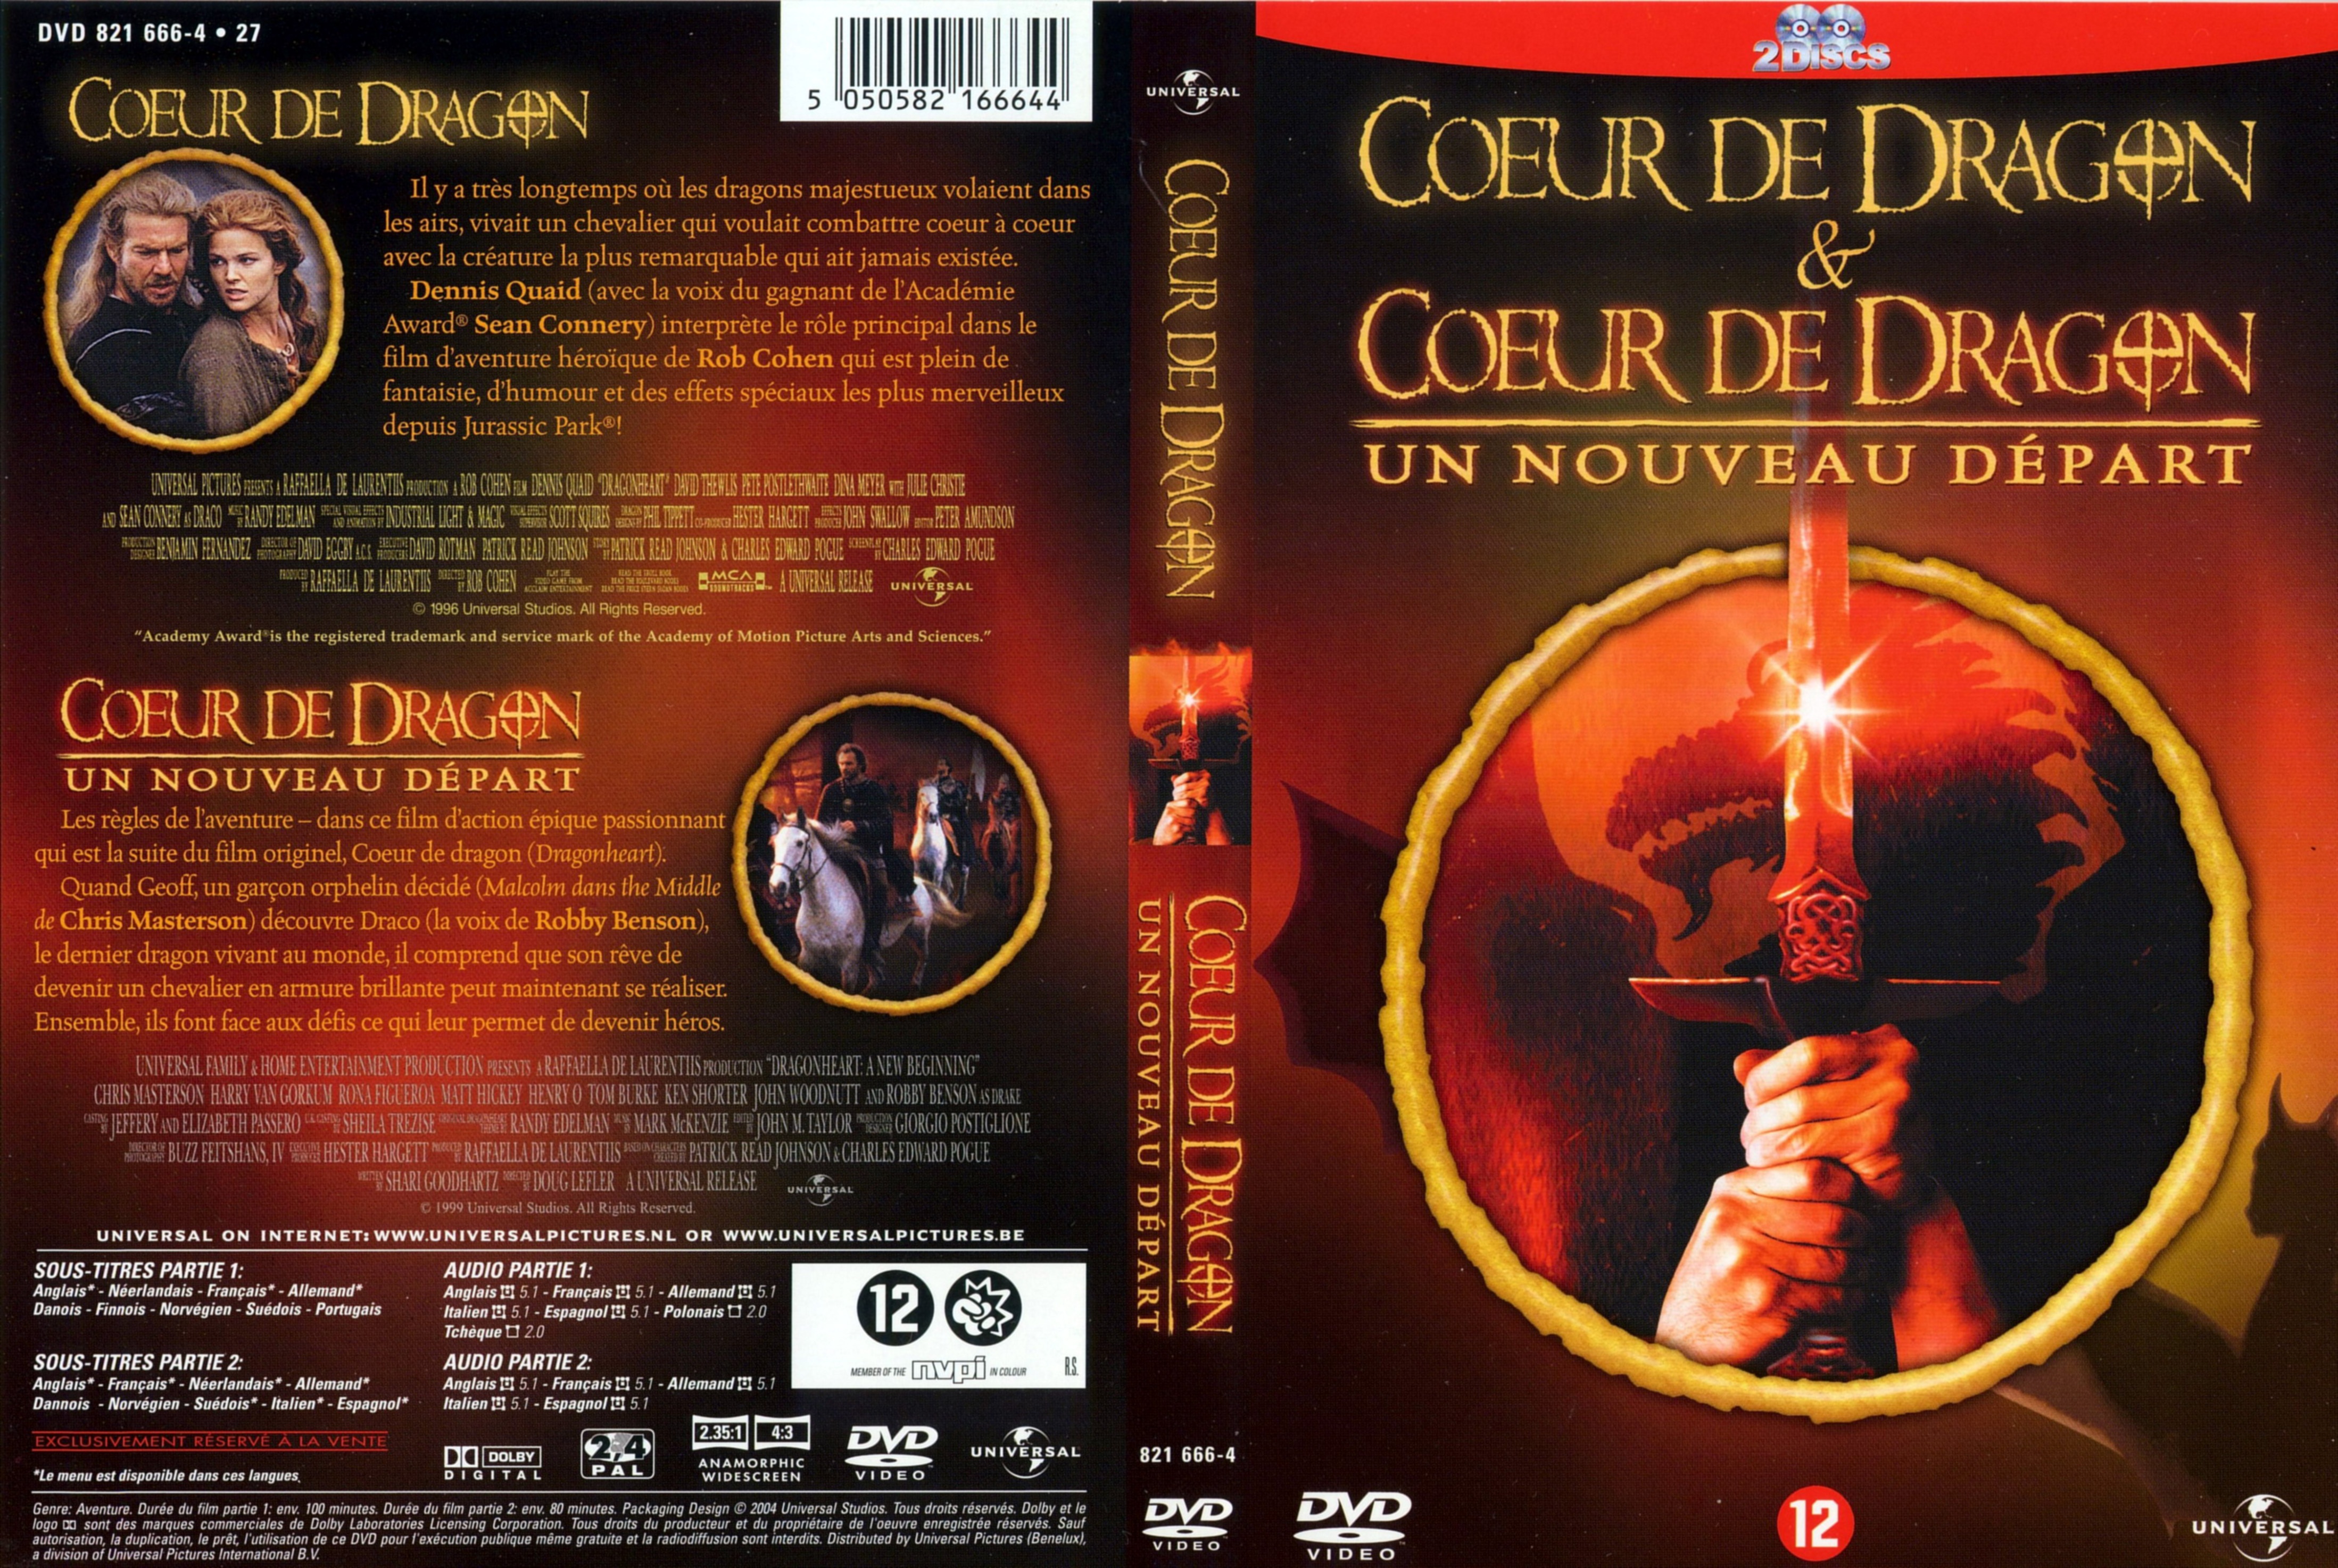 Jaquette DVD Coeur de dragon 1 + 2